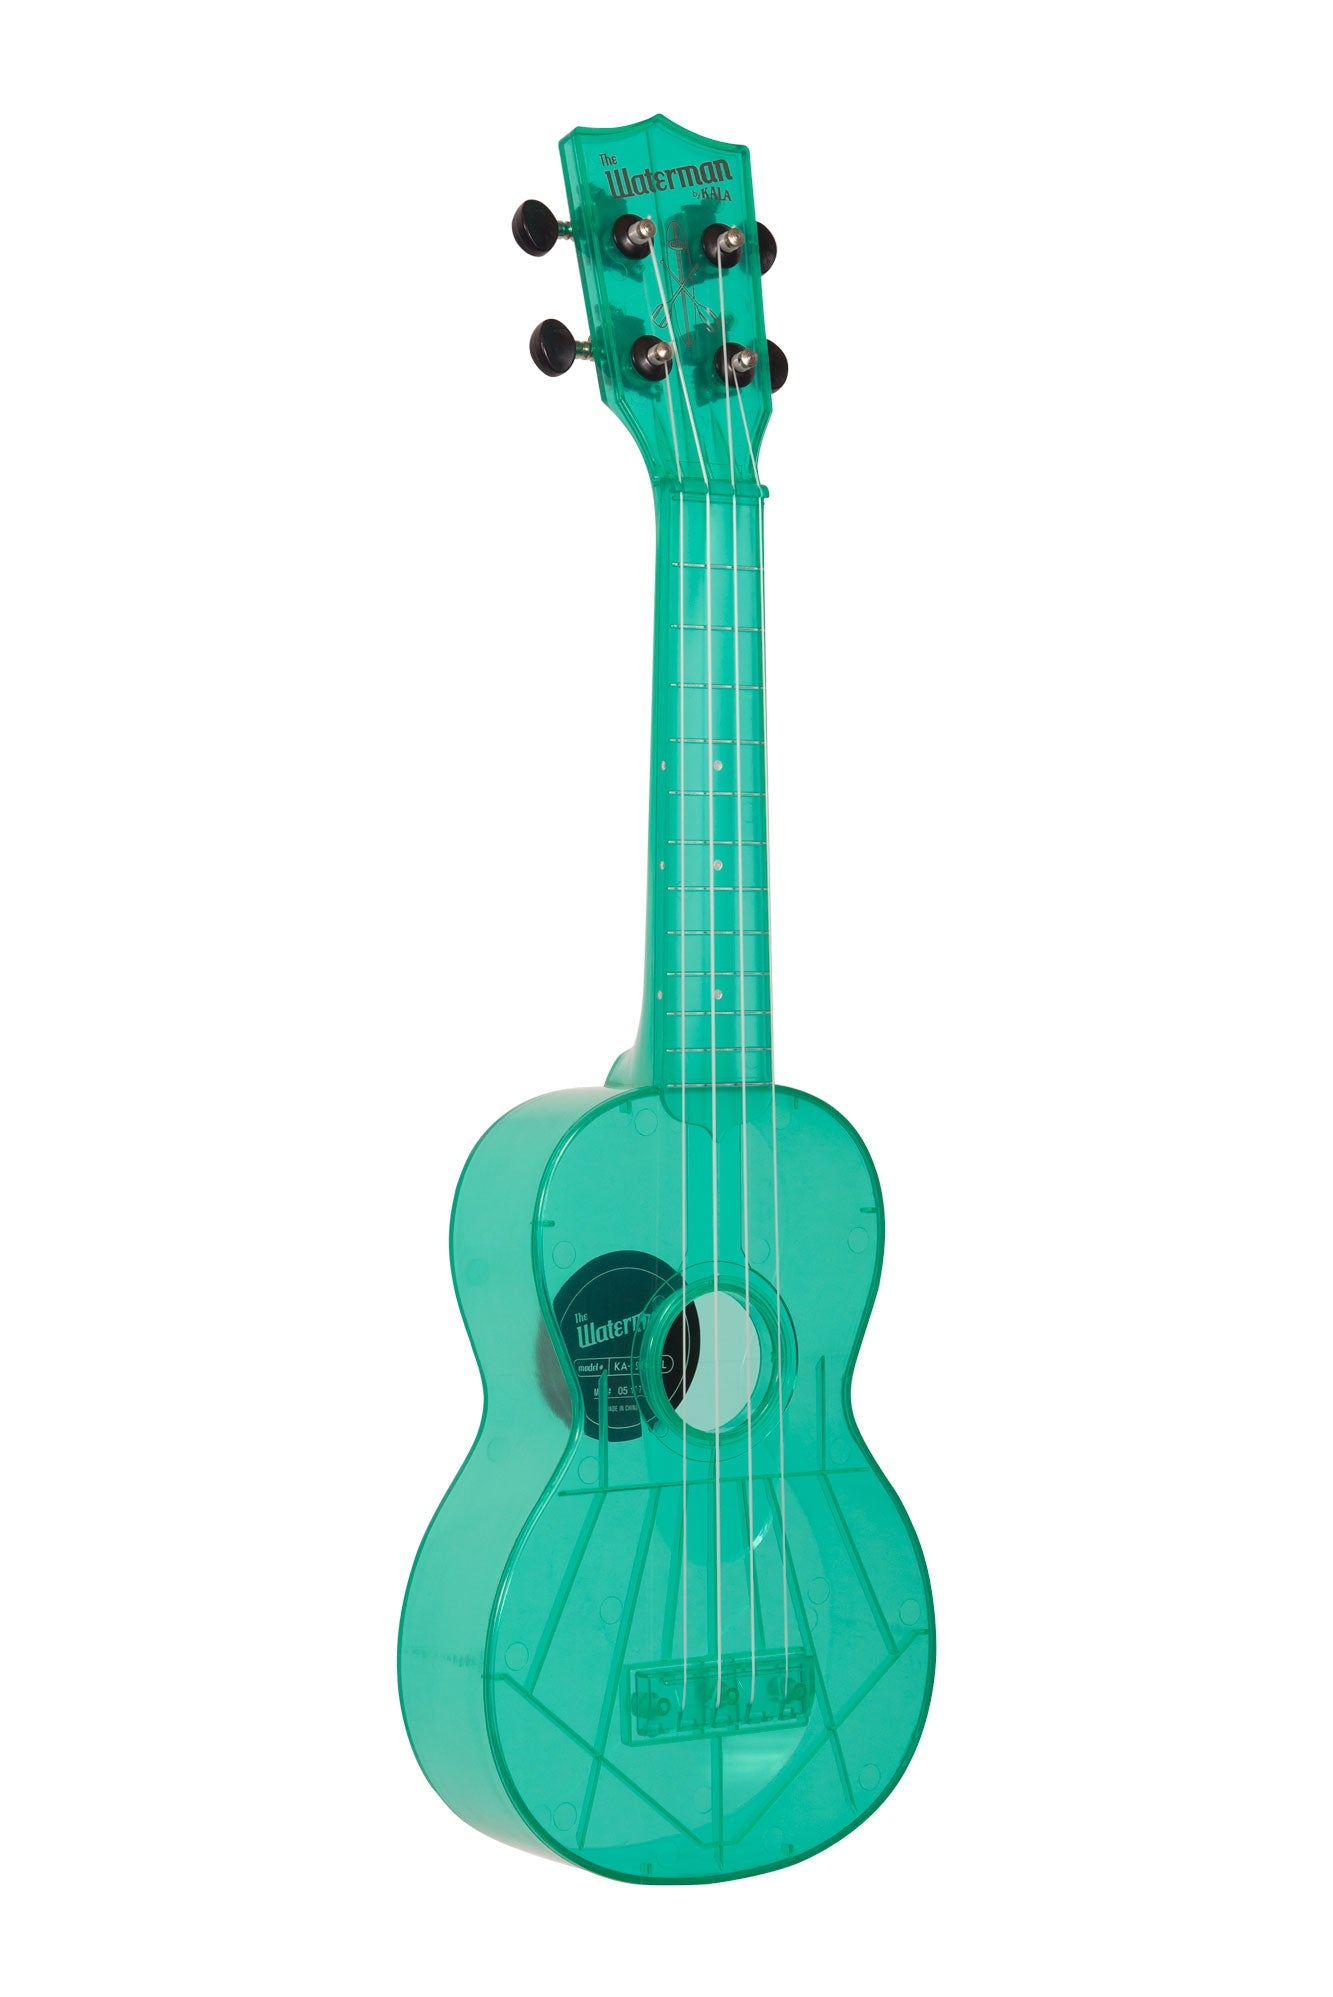 Kala Fluorescent Waterman Composite Soprano Ukulele Water Resistant 4 String Guitar with 12 Frets KA-SWF (Blue Raspberry, Orangesicle)